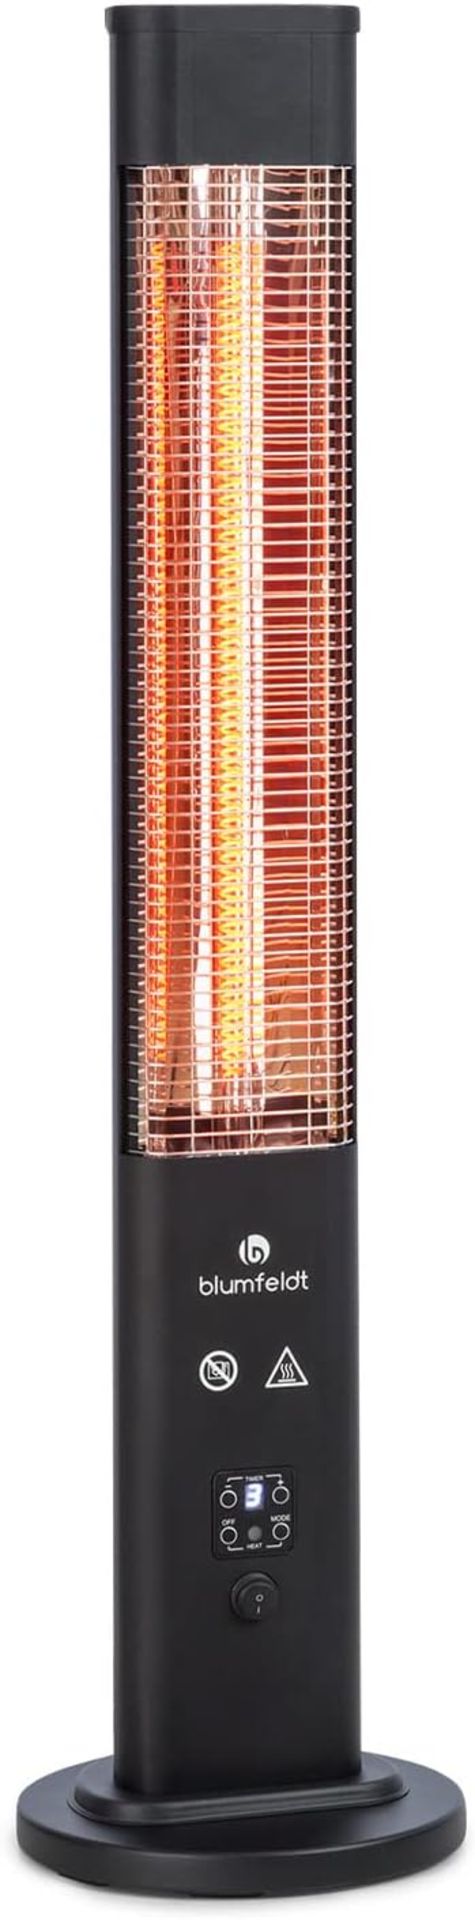 Blumfeldt HHG6 Heat Guru Plus Patio Heater (stock image).